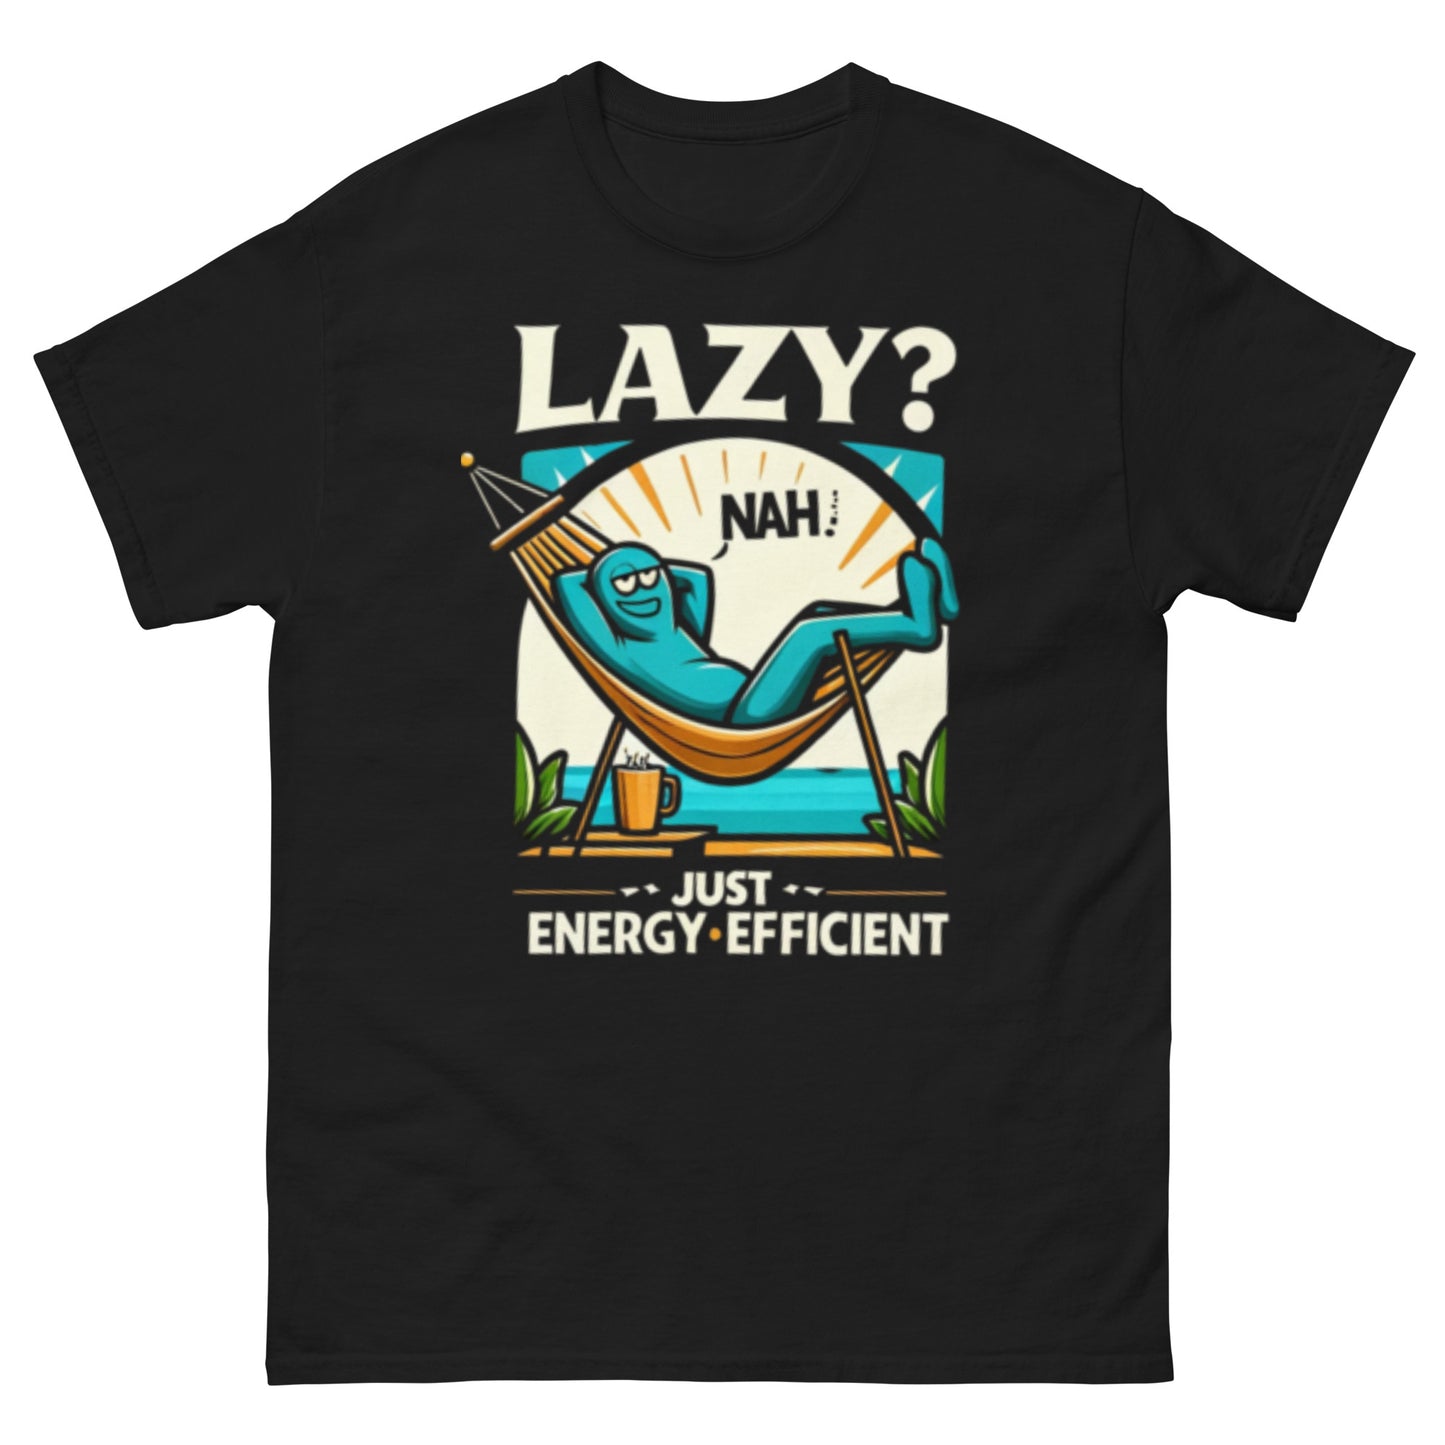 Lazy? Nah, just energy-efficient - Men's classic tee